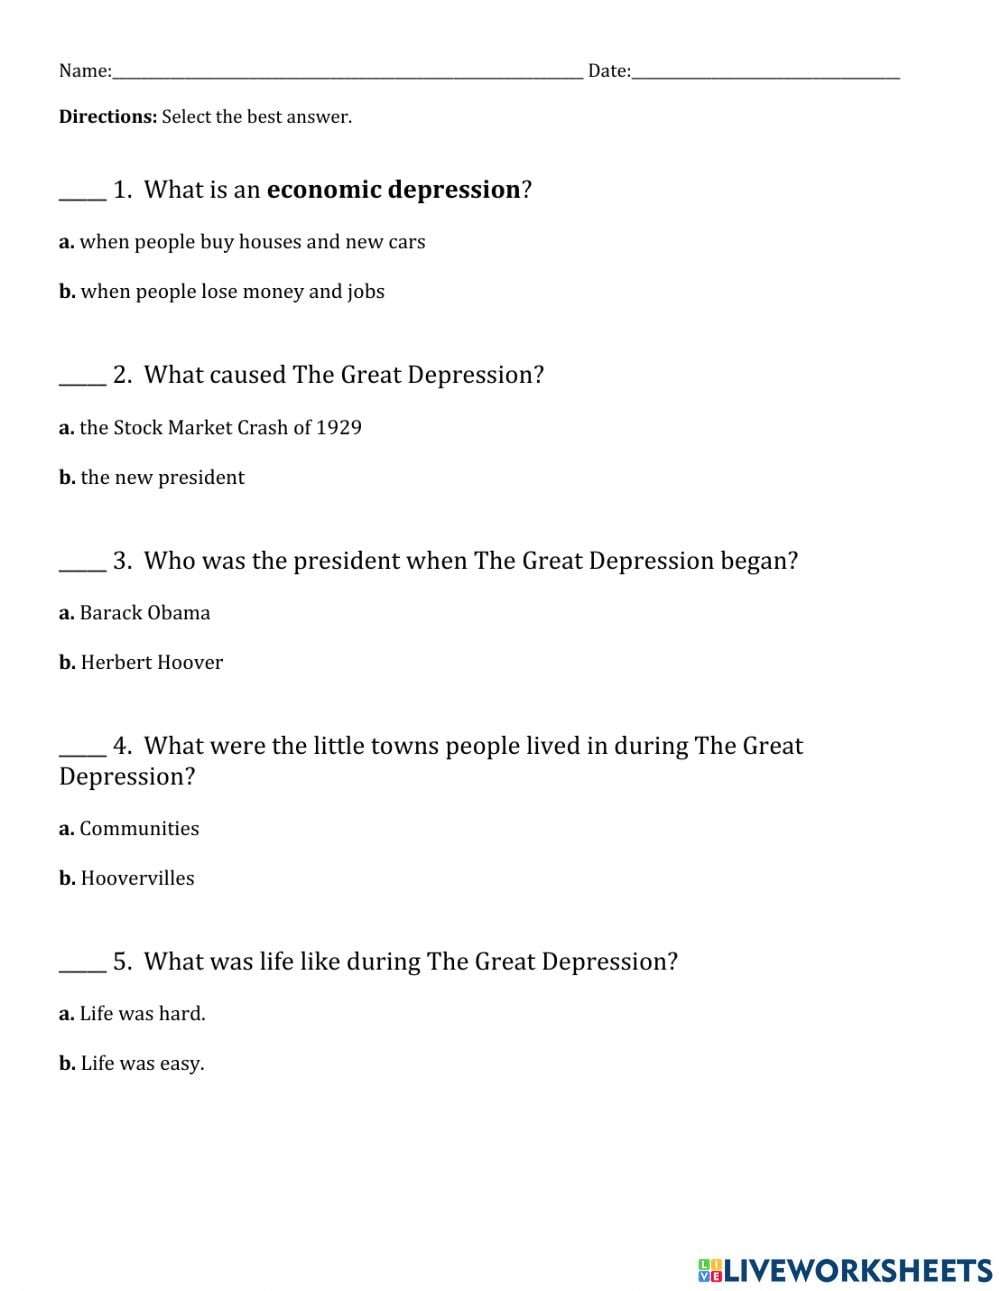 The Great Depression Reading Comprehension Worksheets Pdf